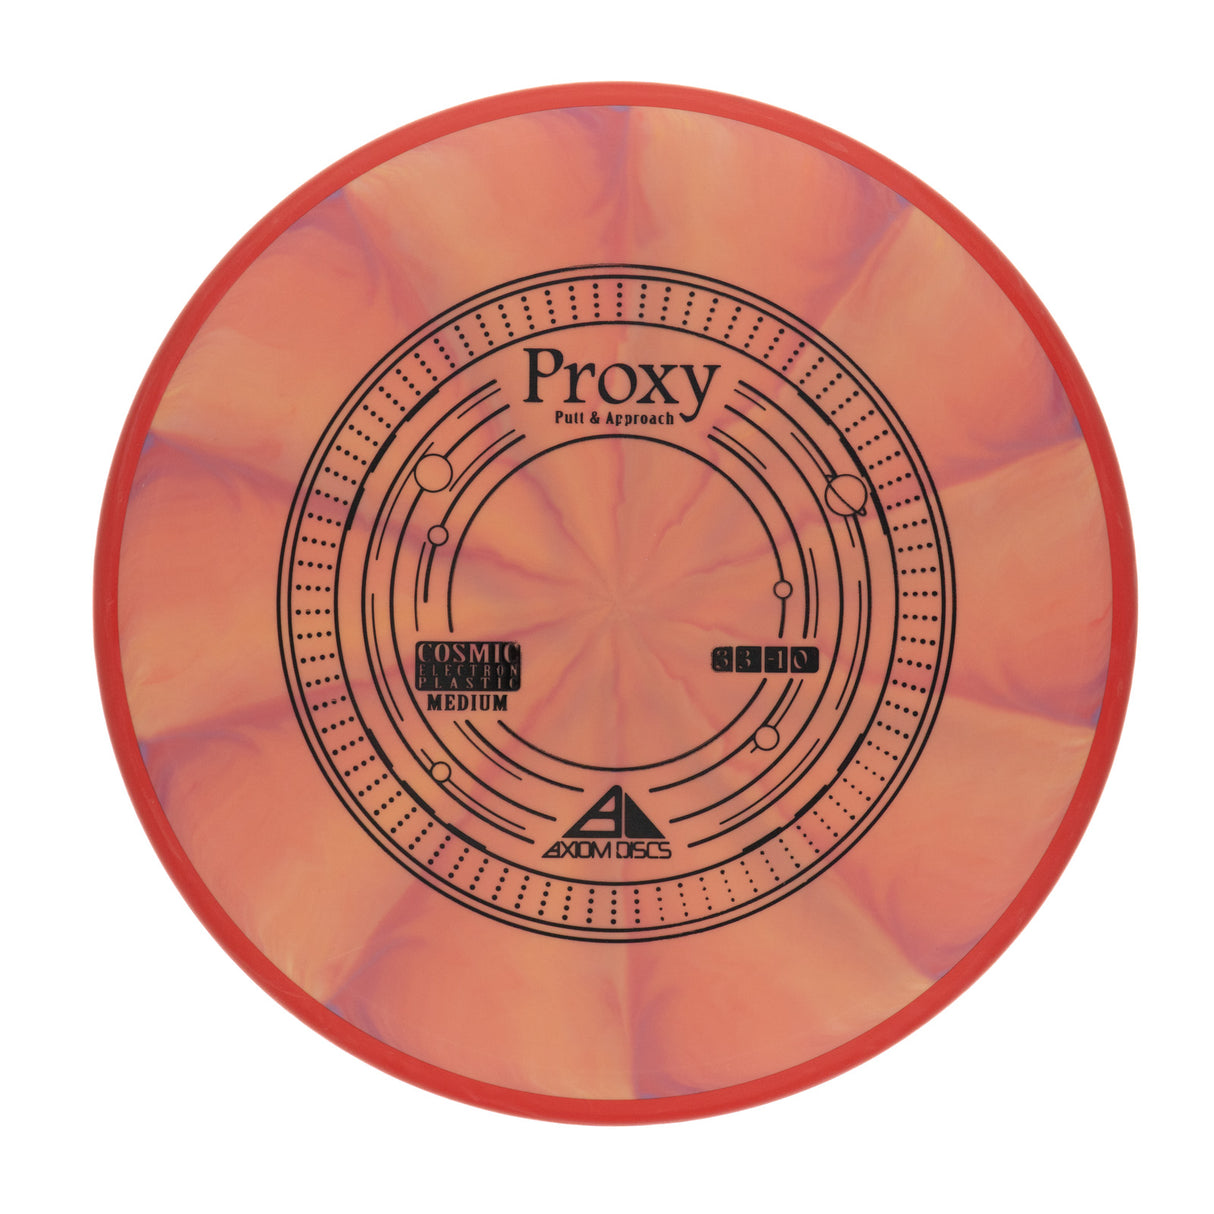 Axiom Proxy - Cosmic Electron Medium 175g | Style 0002